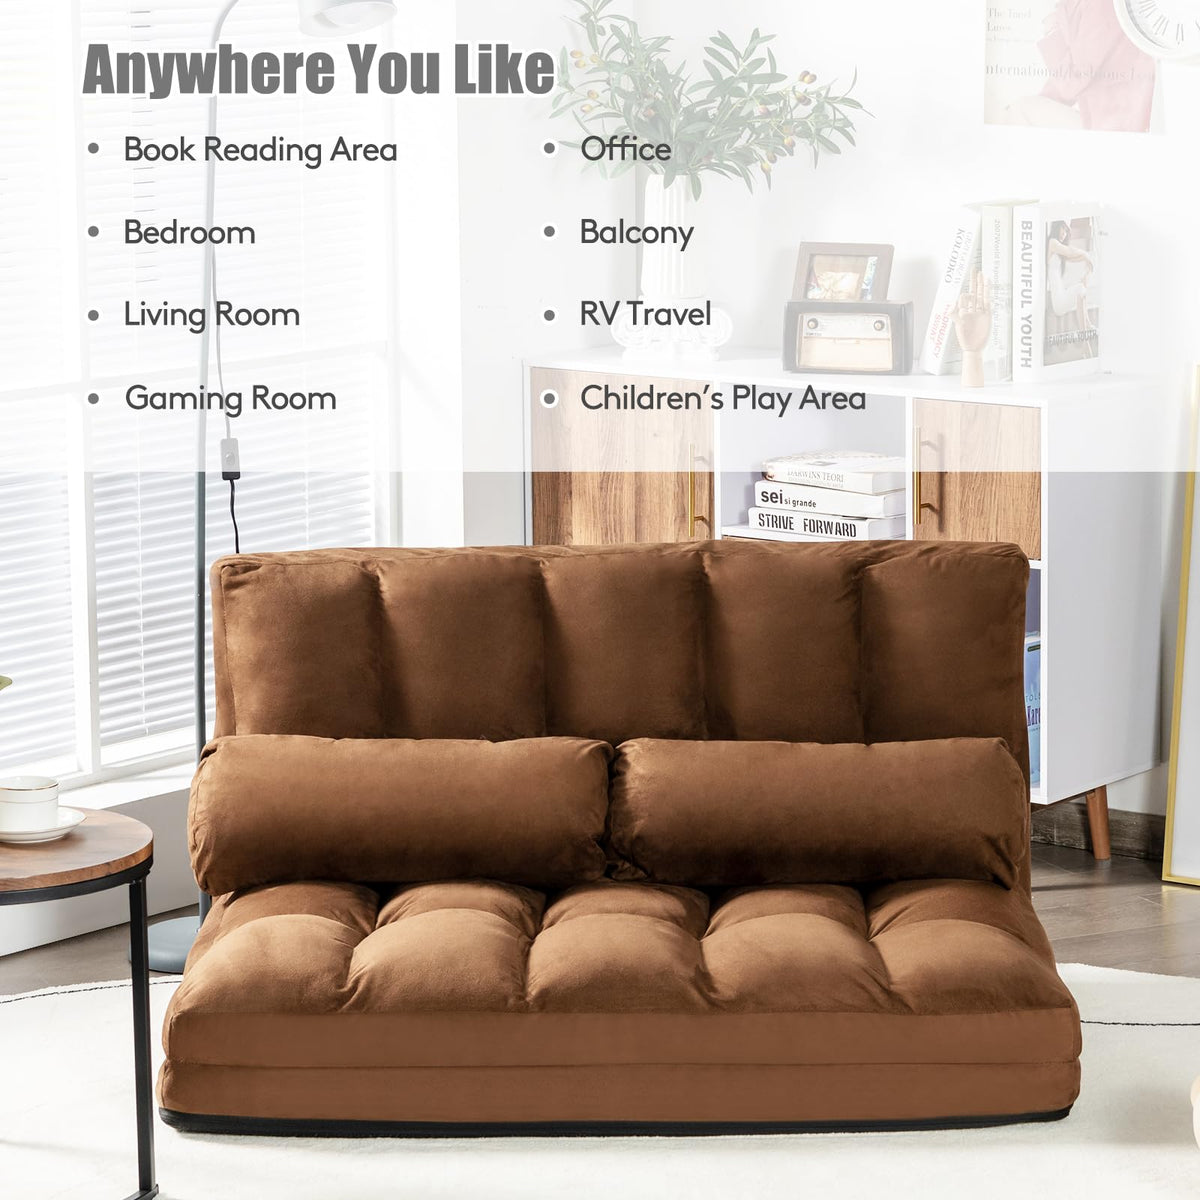 Giantex Adjustable Floor Sofa 6-Position Foldable Lazy Sofa Bed with Detachable Cloth Cover